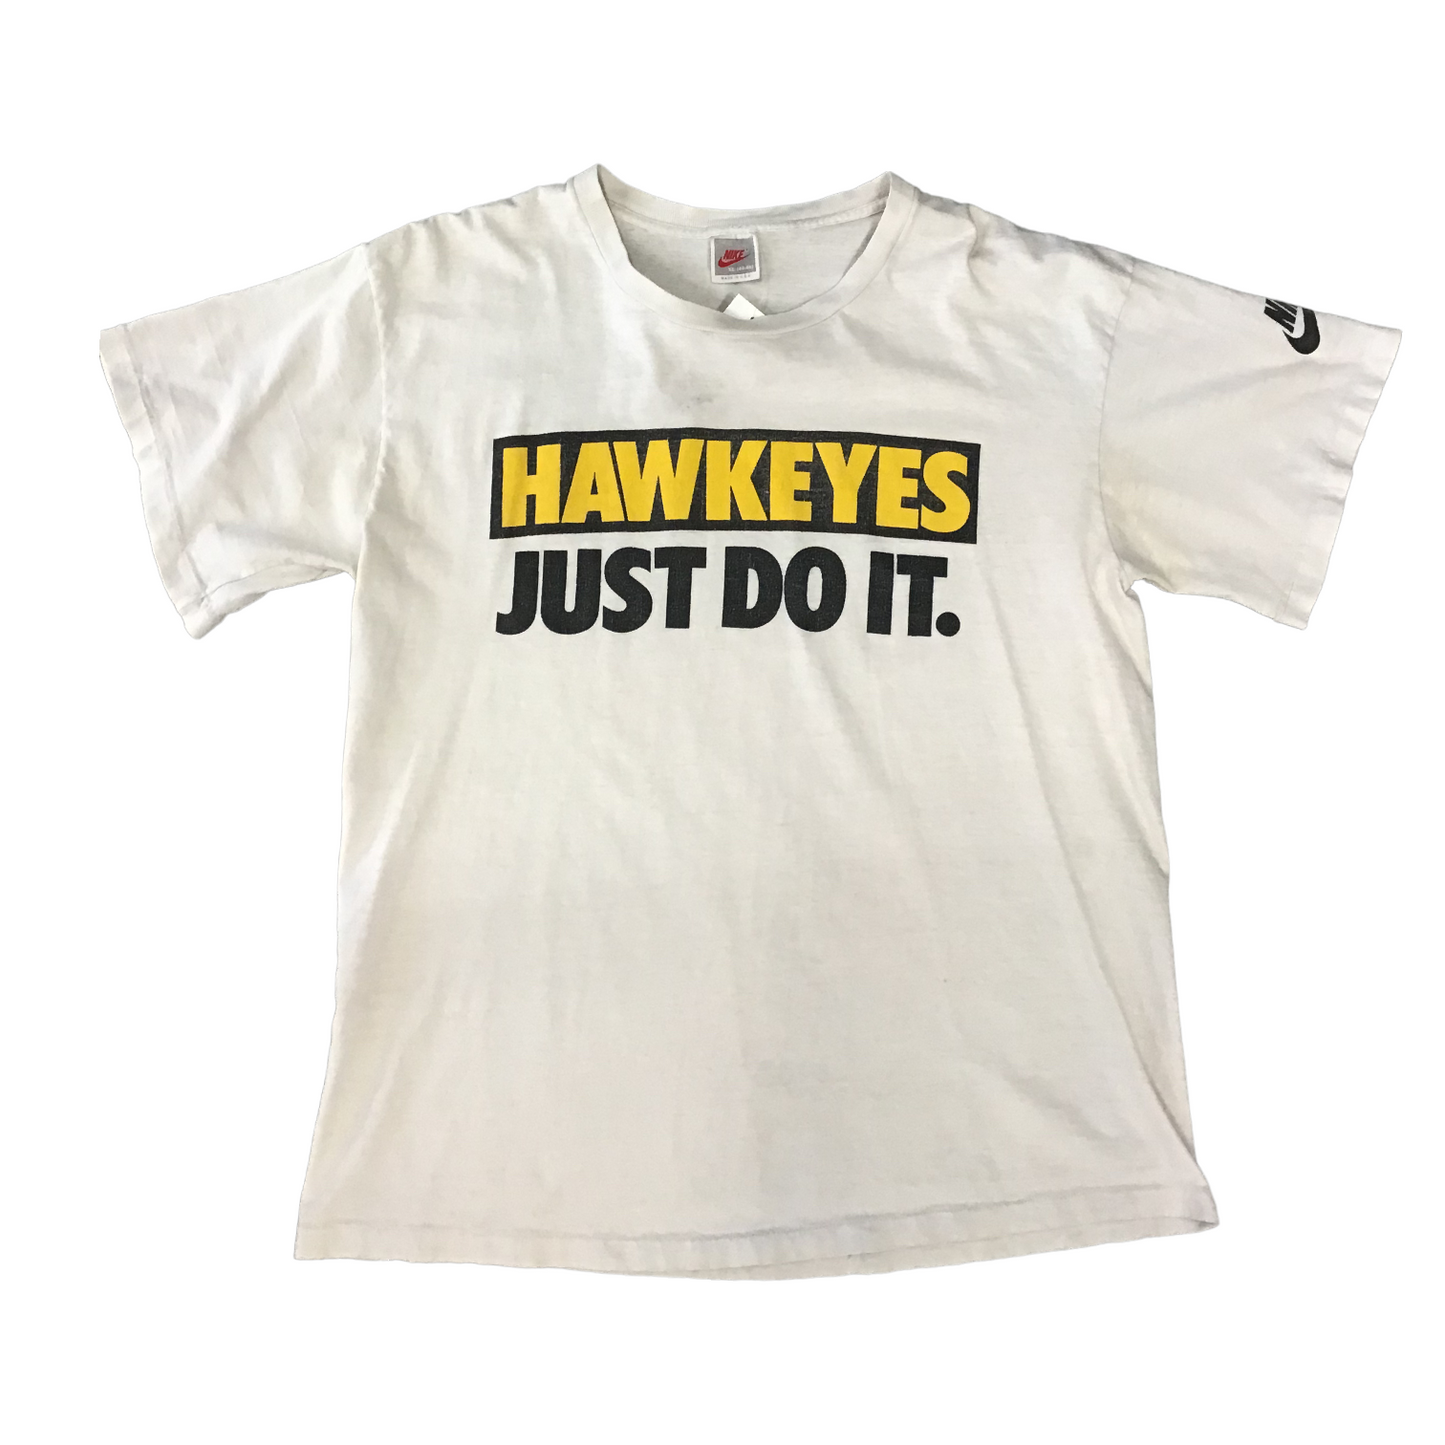 1990’s Nike Hawkeye "Just do it" vintage  sports tee